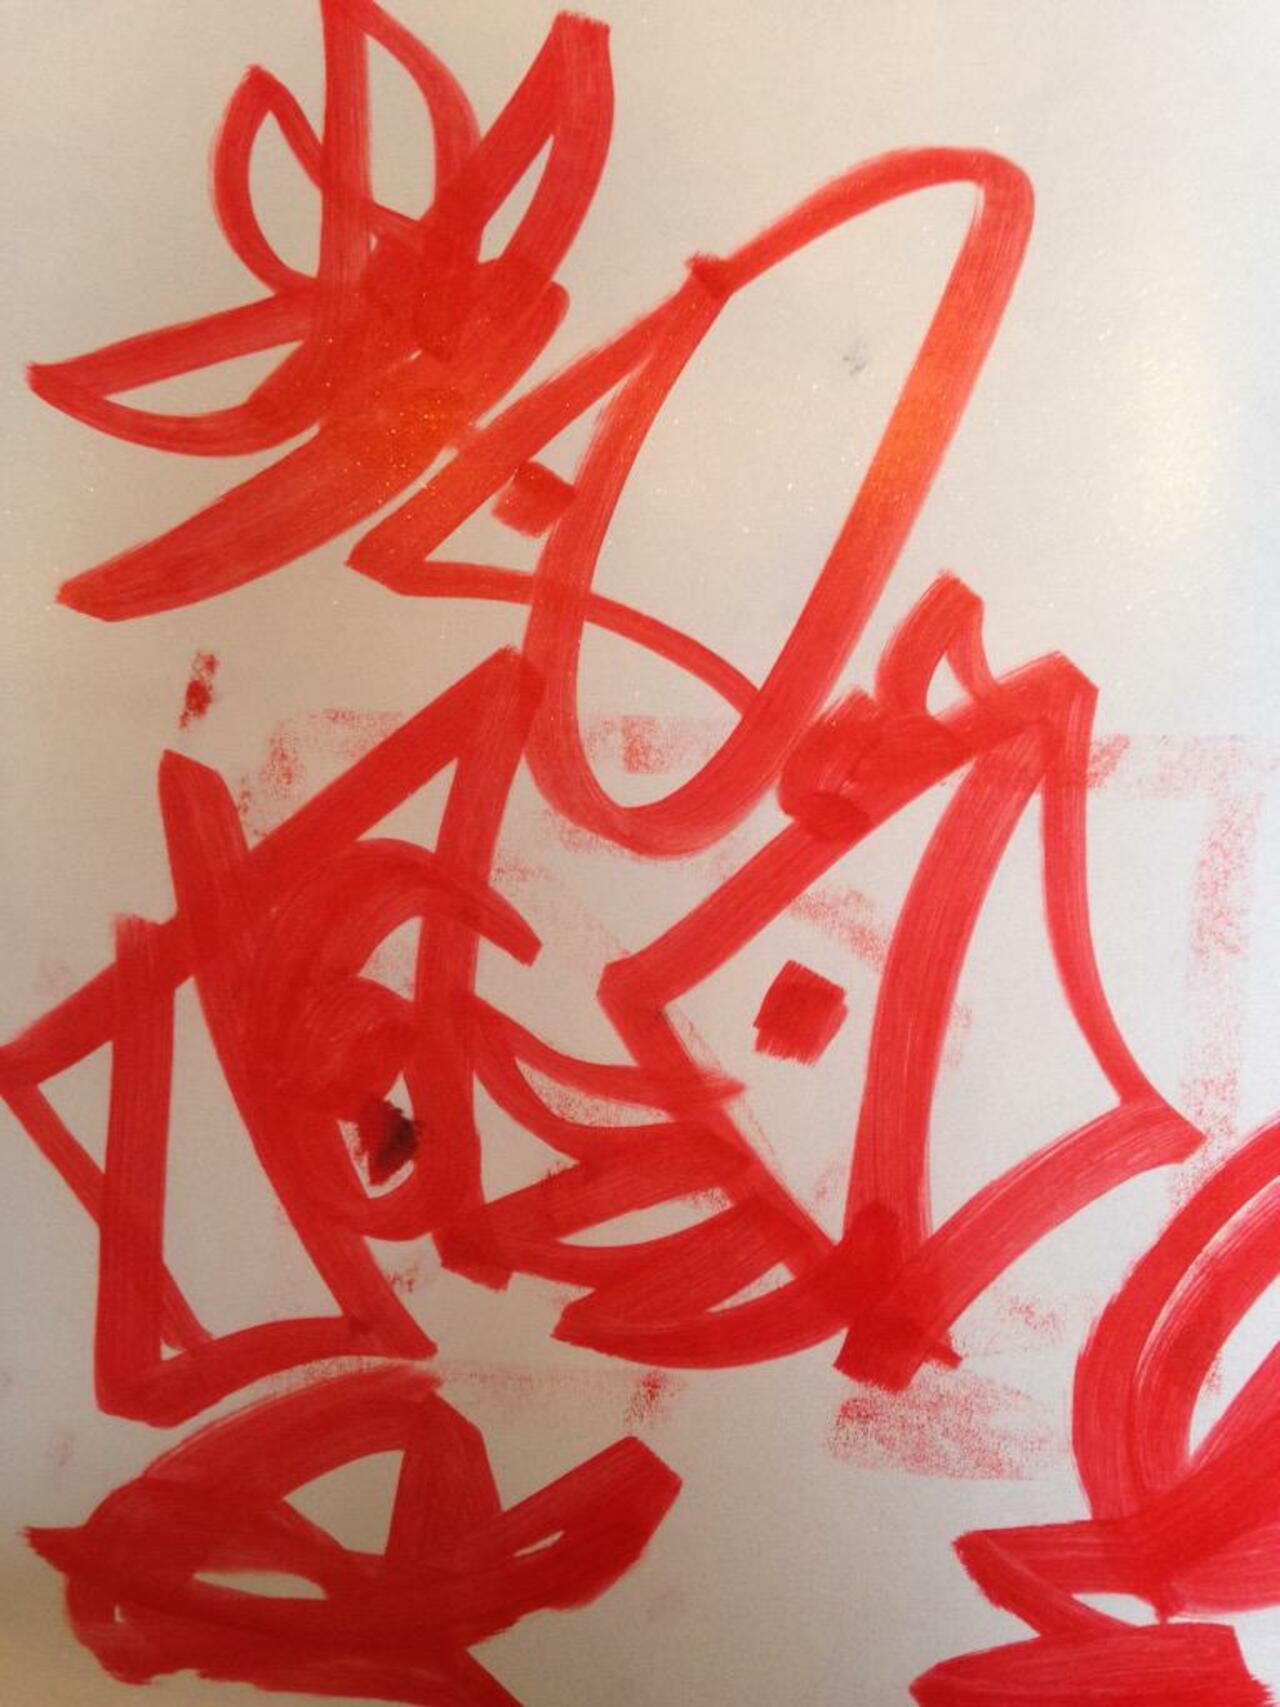 Red dottttt #graffiti #streetart http://t.co/pMVNI9QoBq